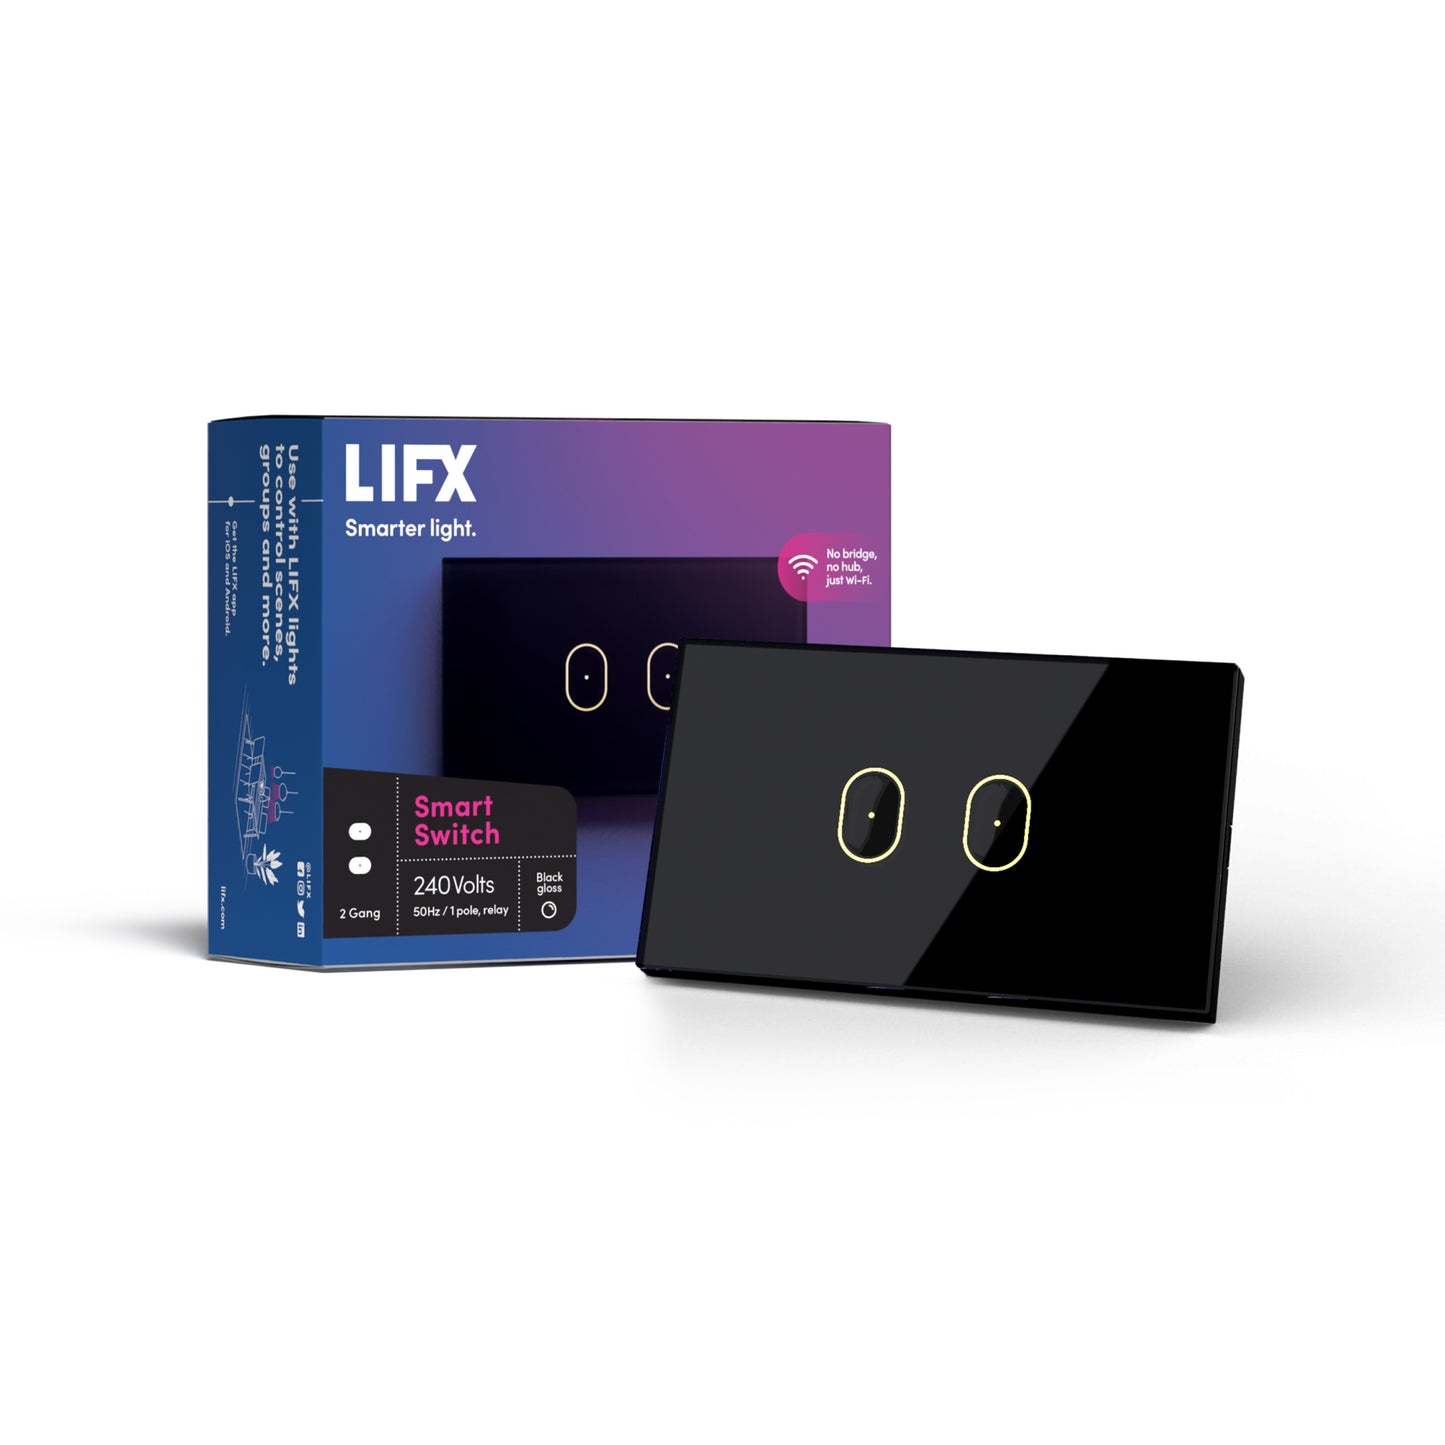 LIFX Smart Switch Black 4 Button